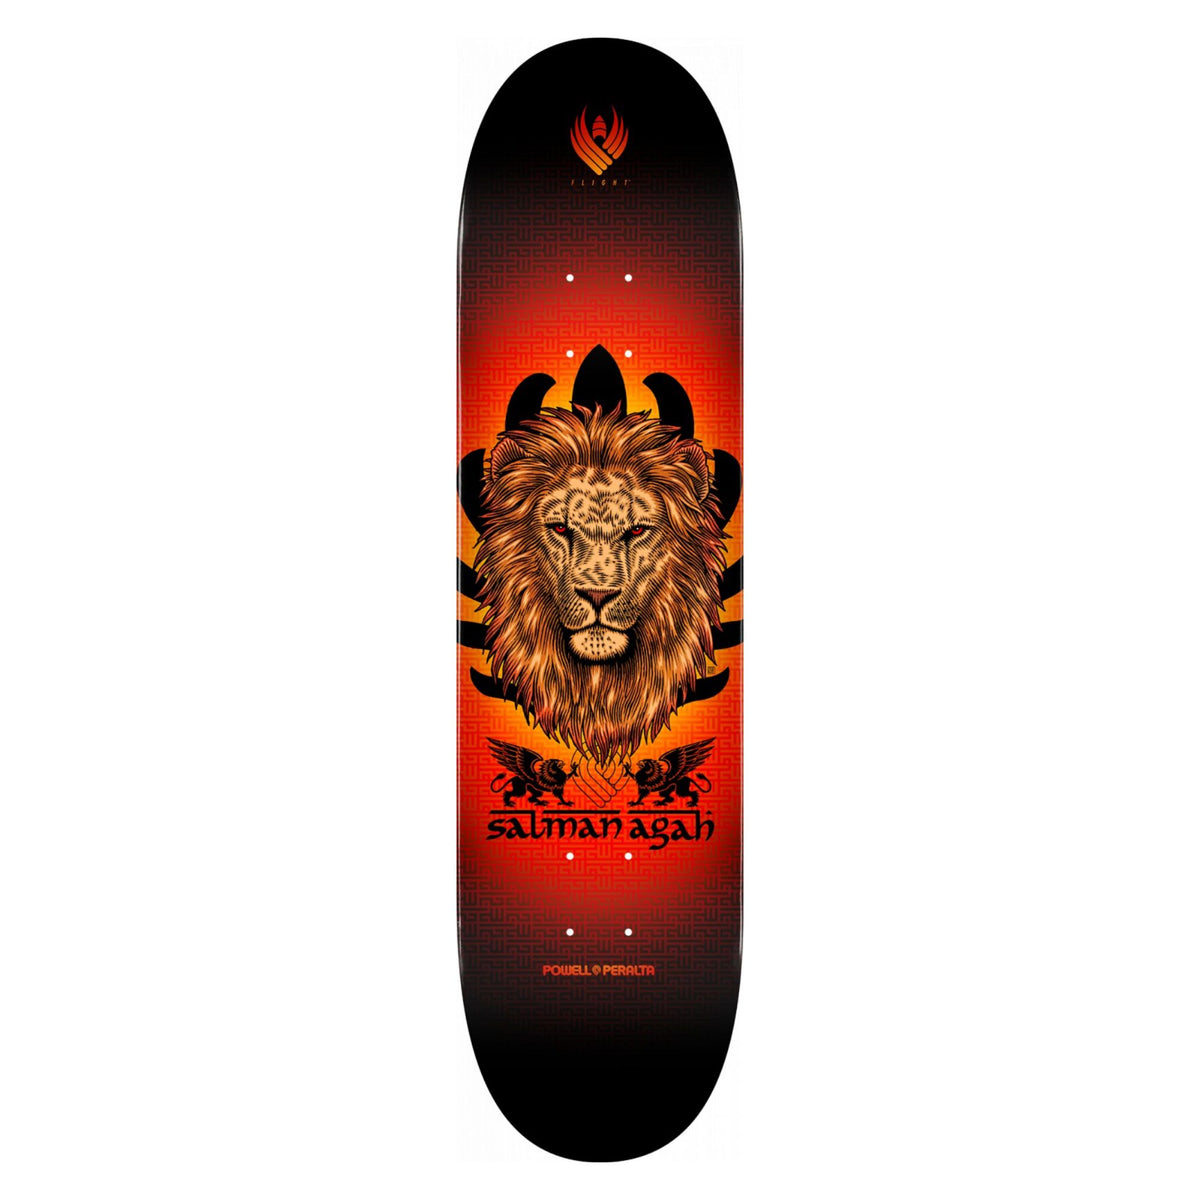 Powell-Peralta Flight Skateboard Deck, Salman Agah Lion, Shape 242, 8.0"